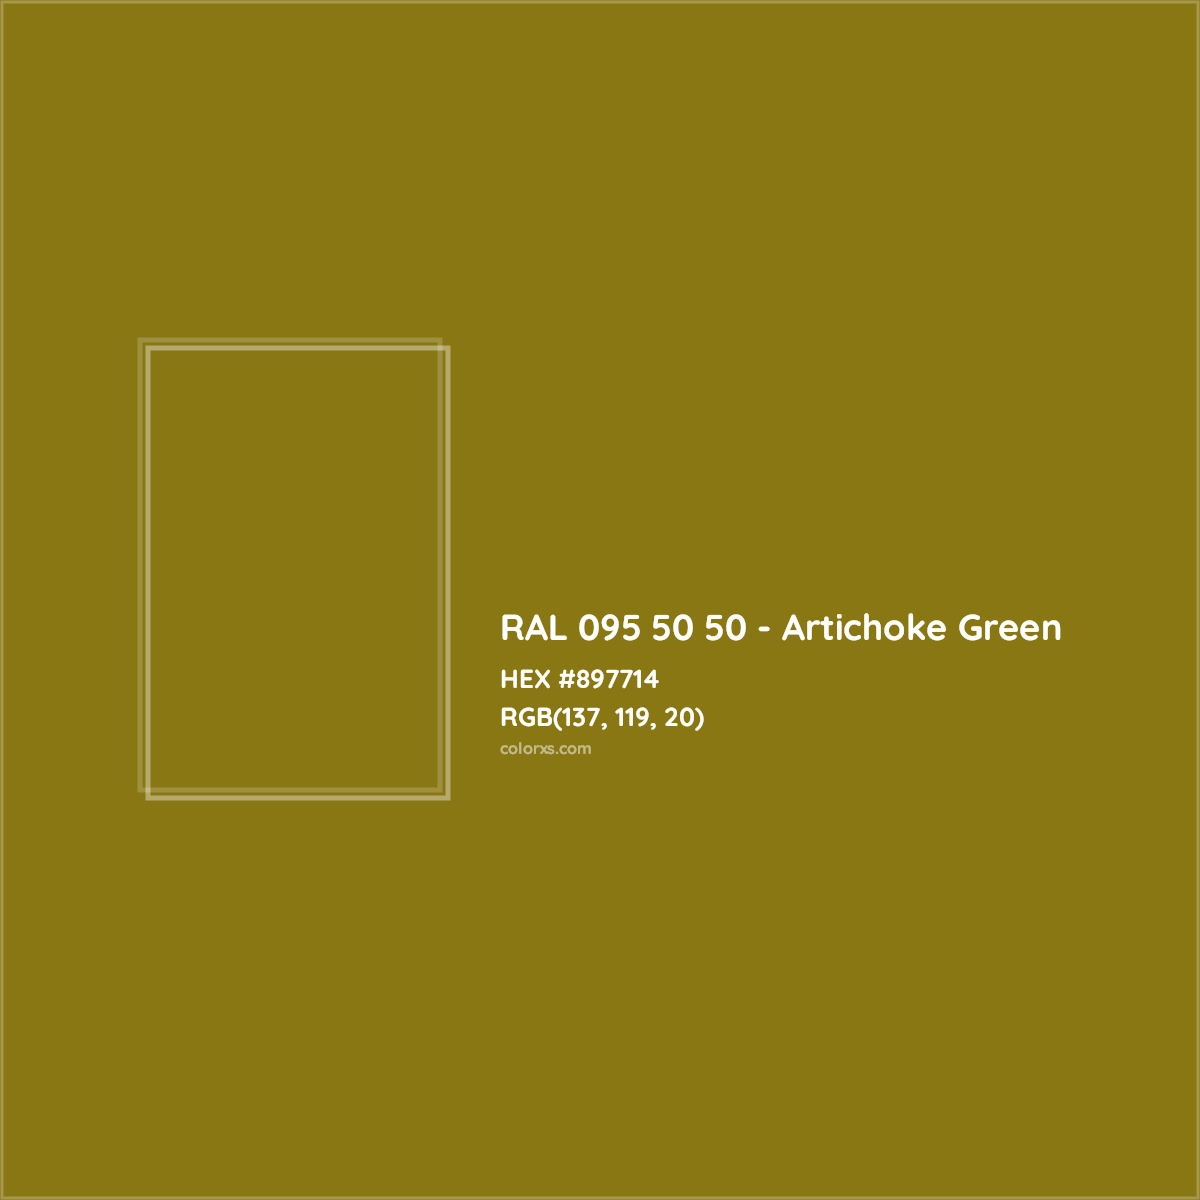 HEX #897714 RAL 095 50 50 - Artichoke Green CMS RAL Design - Color Code